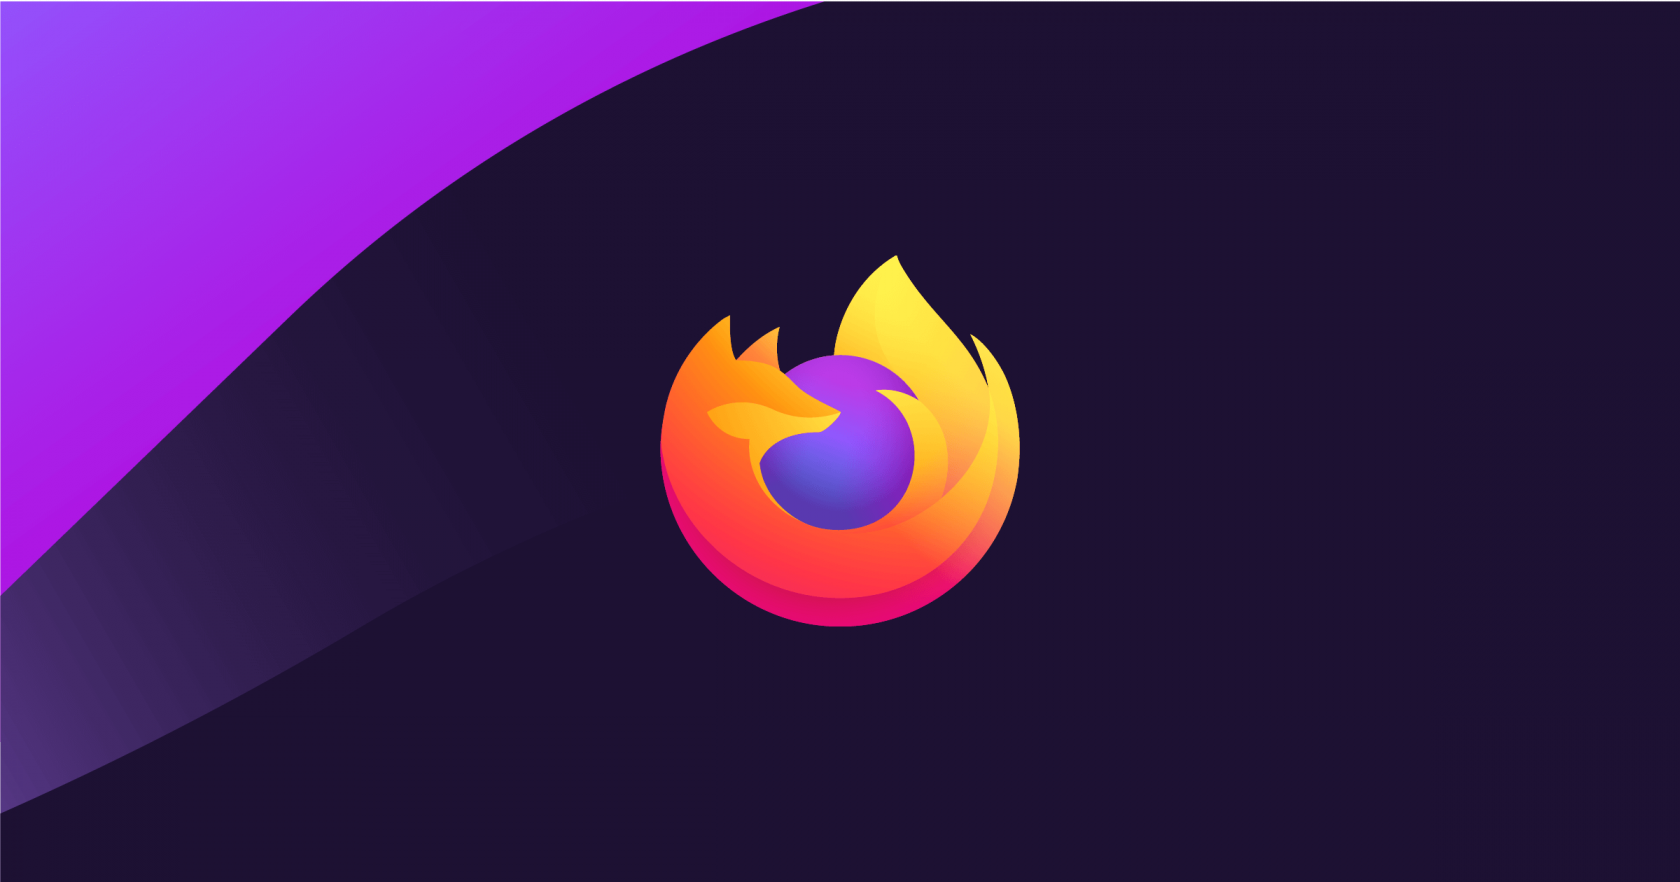 46 million people have left Firefox since 2018